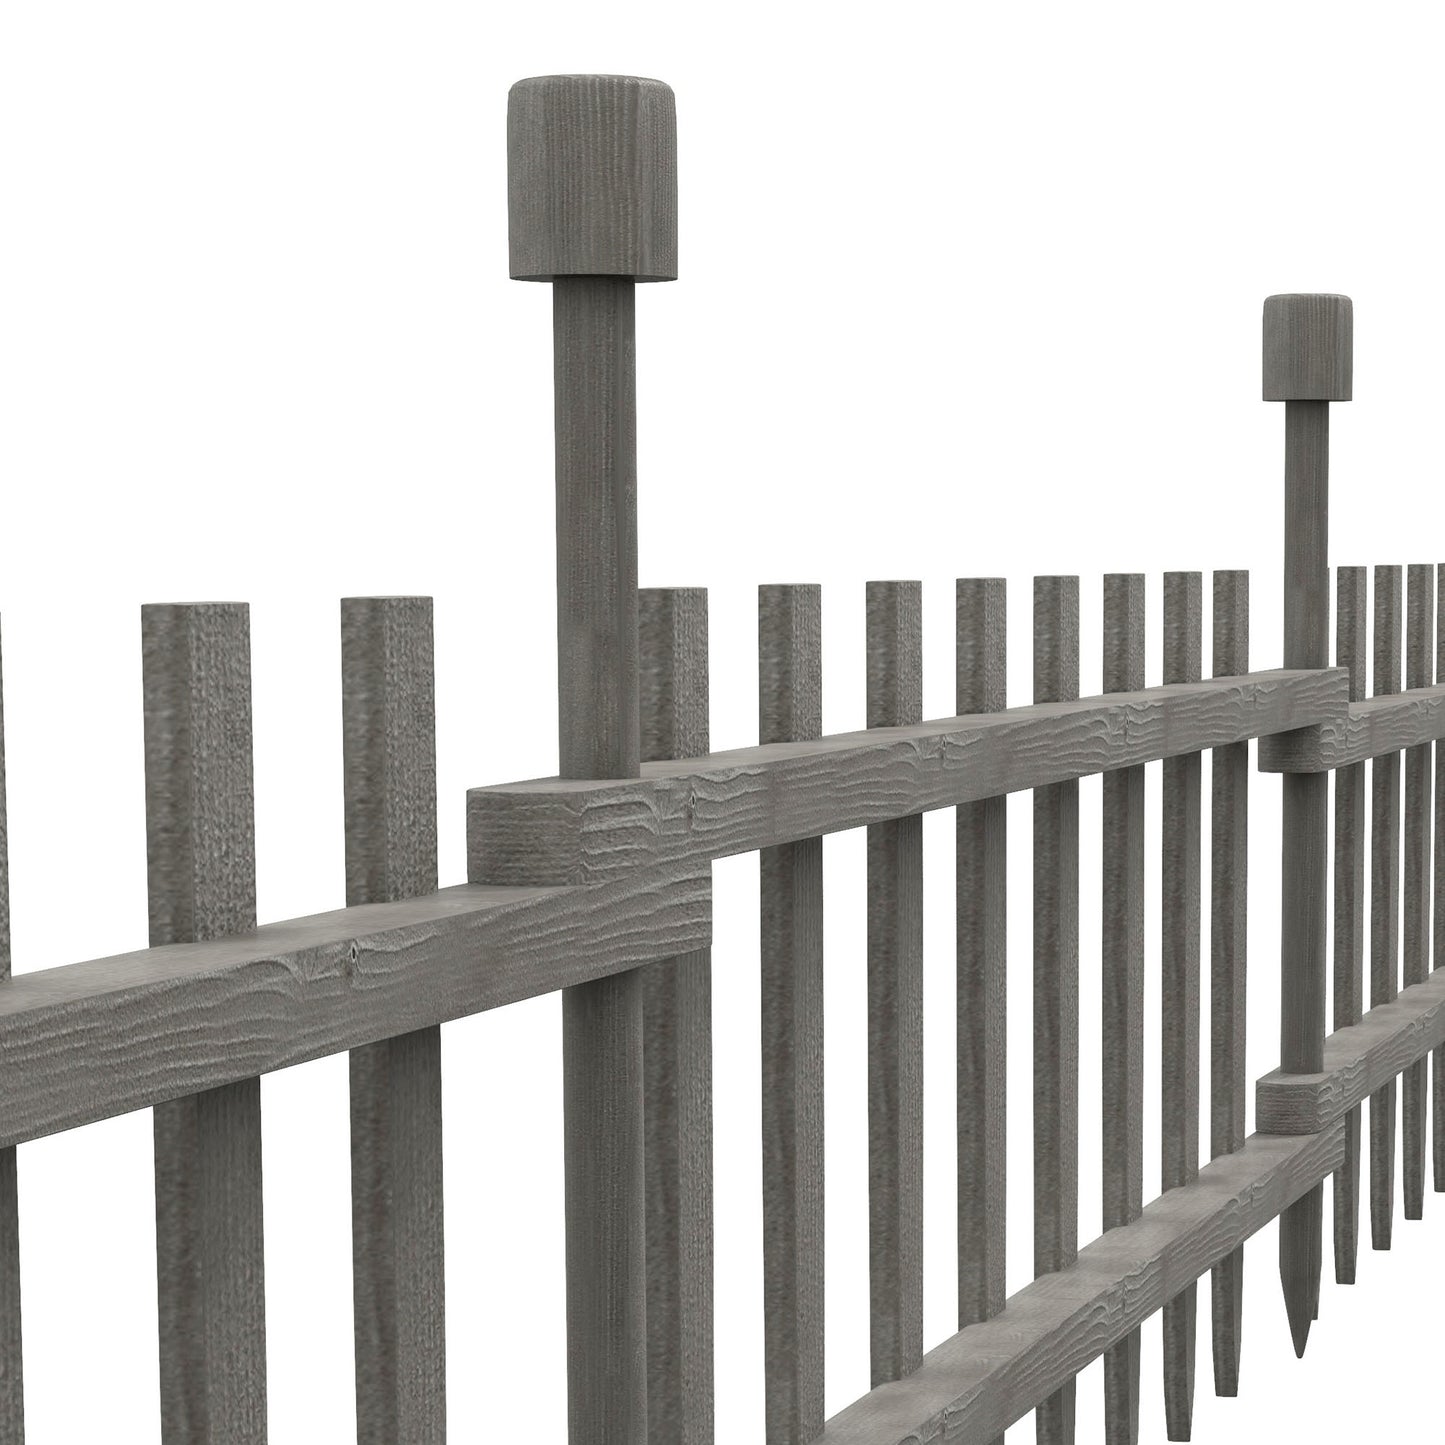 Outsunny 4PCs Wooden Garden Fencing Landscape Edging, Grey